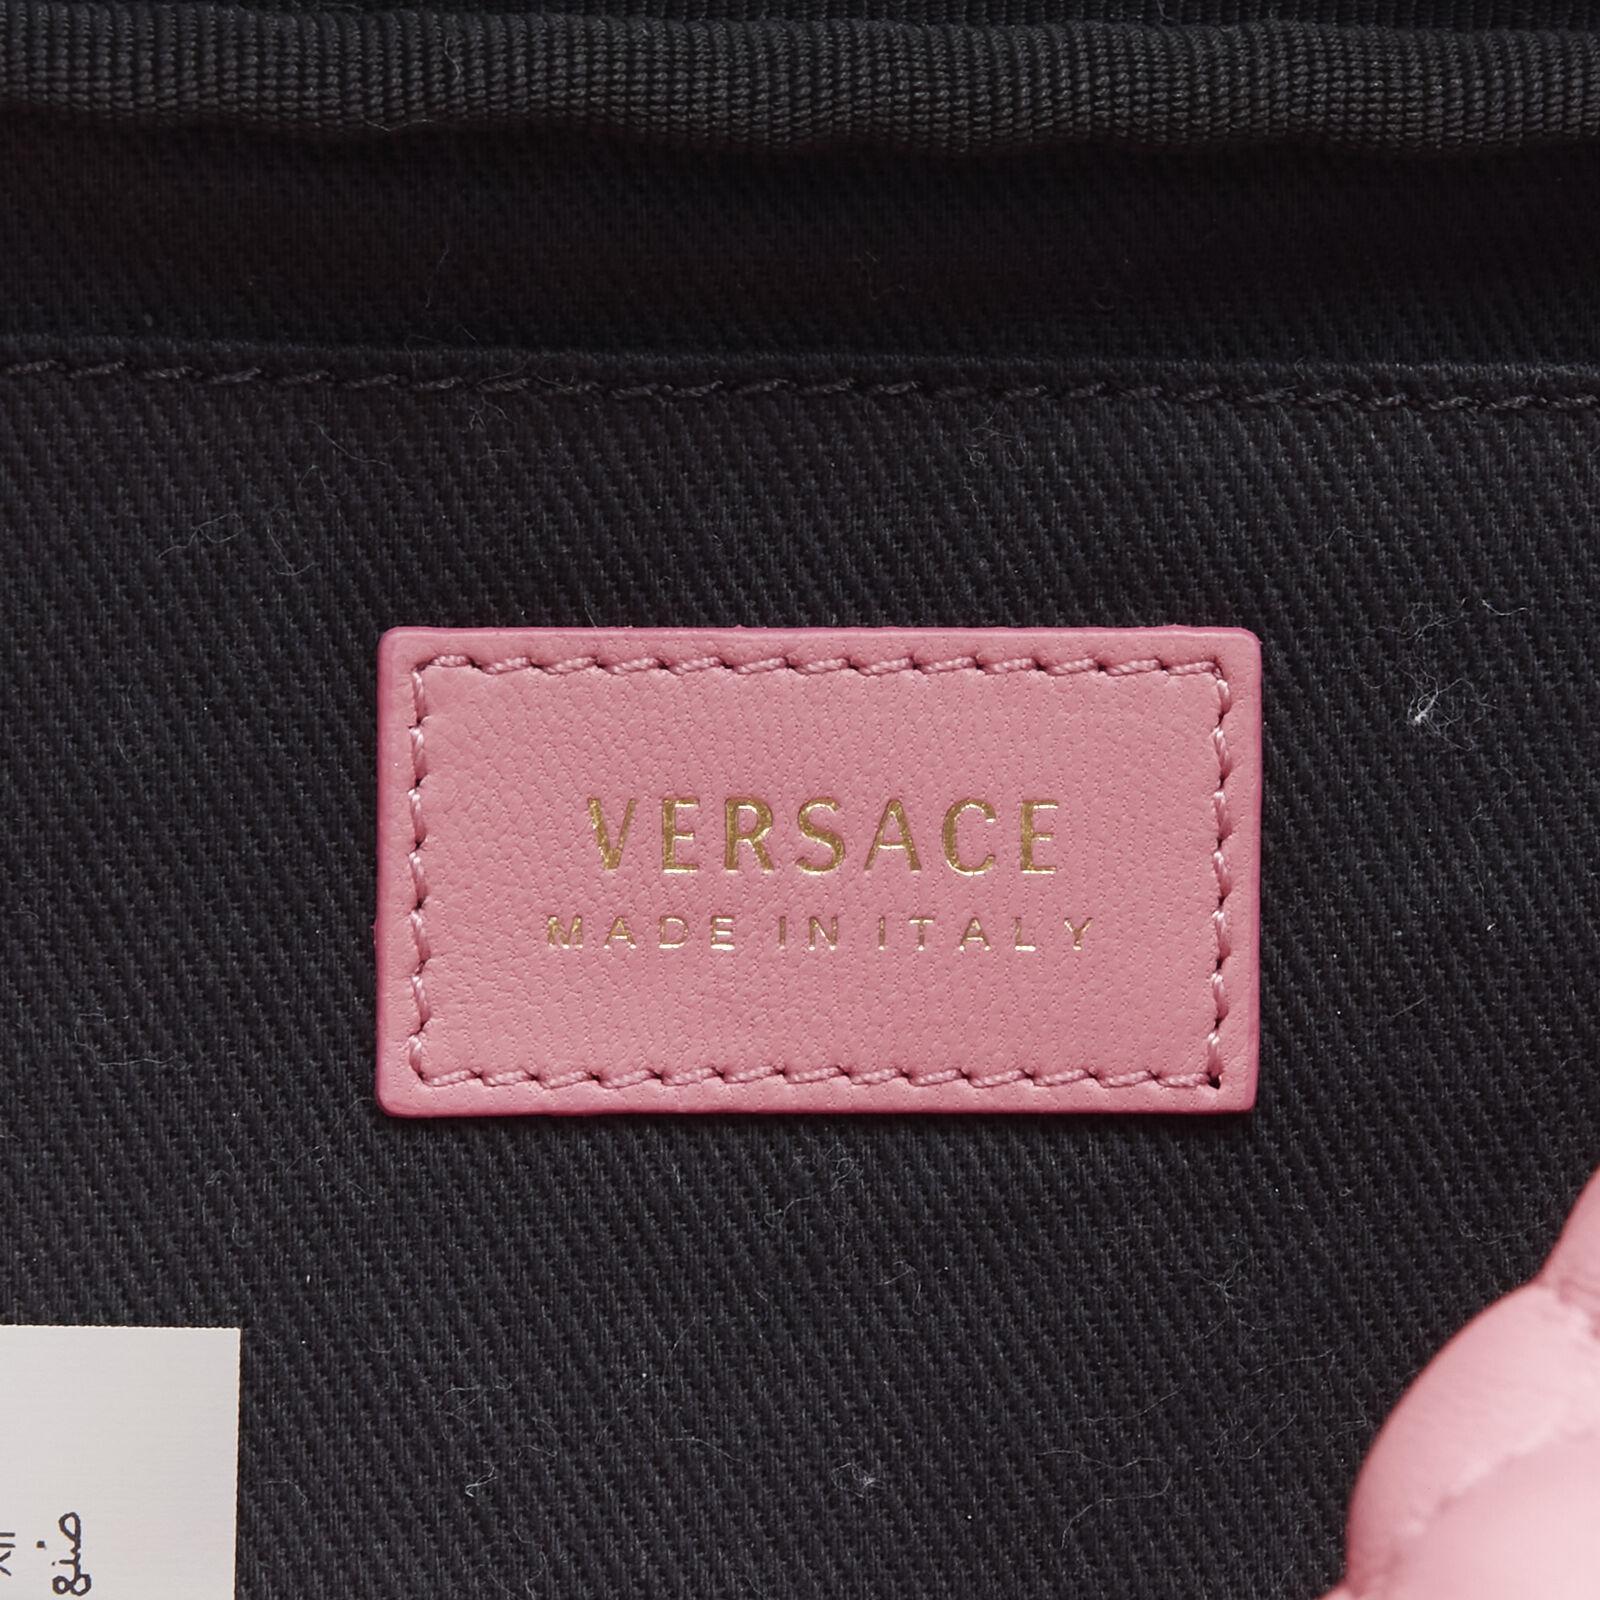 VERSACE Vanitas Barocco pink quilted leather gold Medusa crossbody waist bag 6